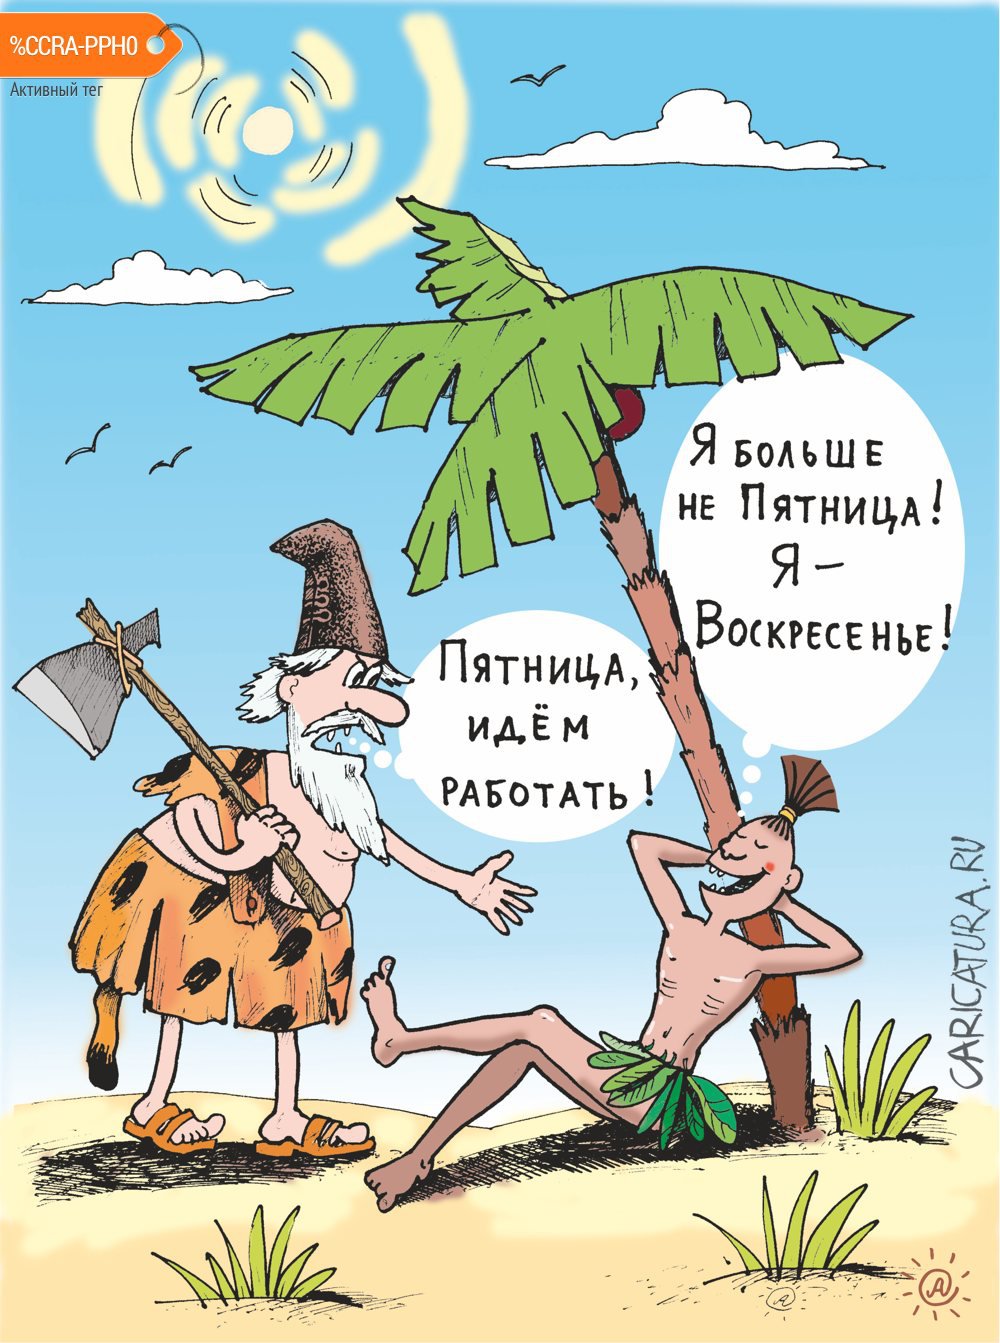 Карикатура "Воскресенье", Павел Атаманчук